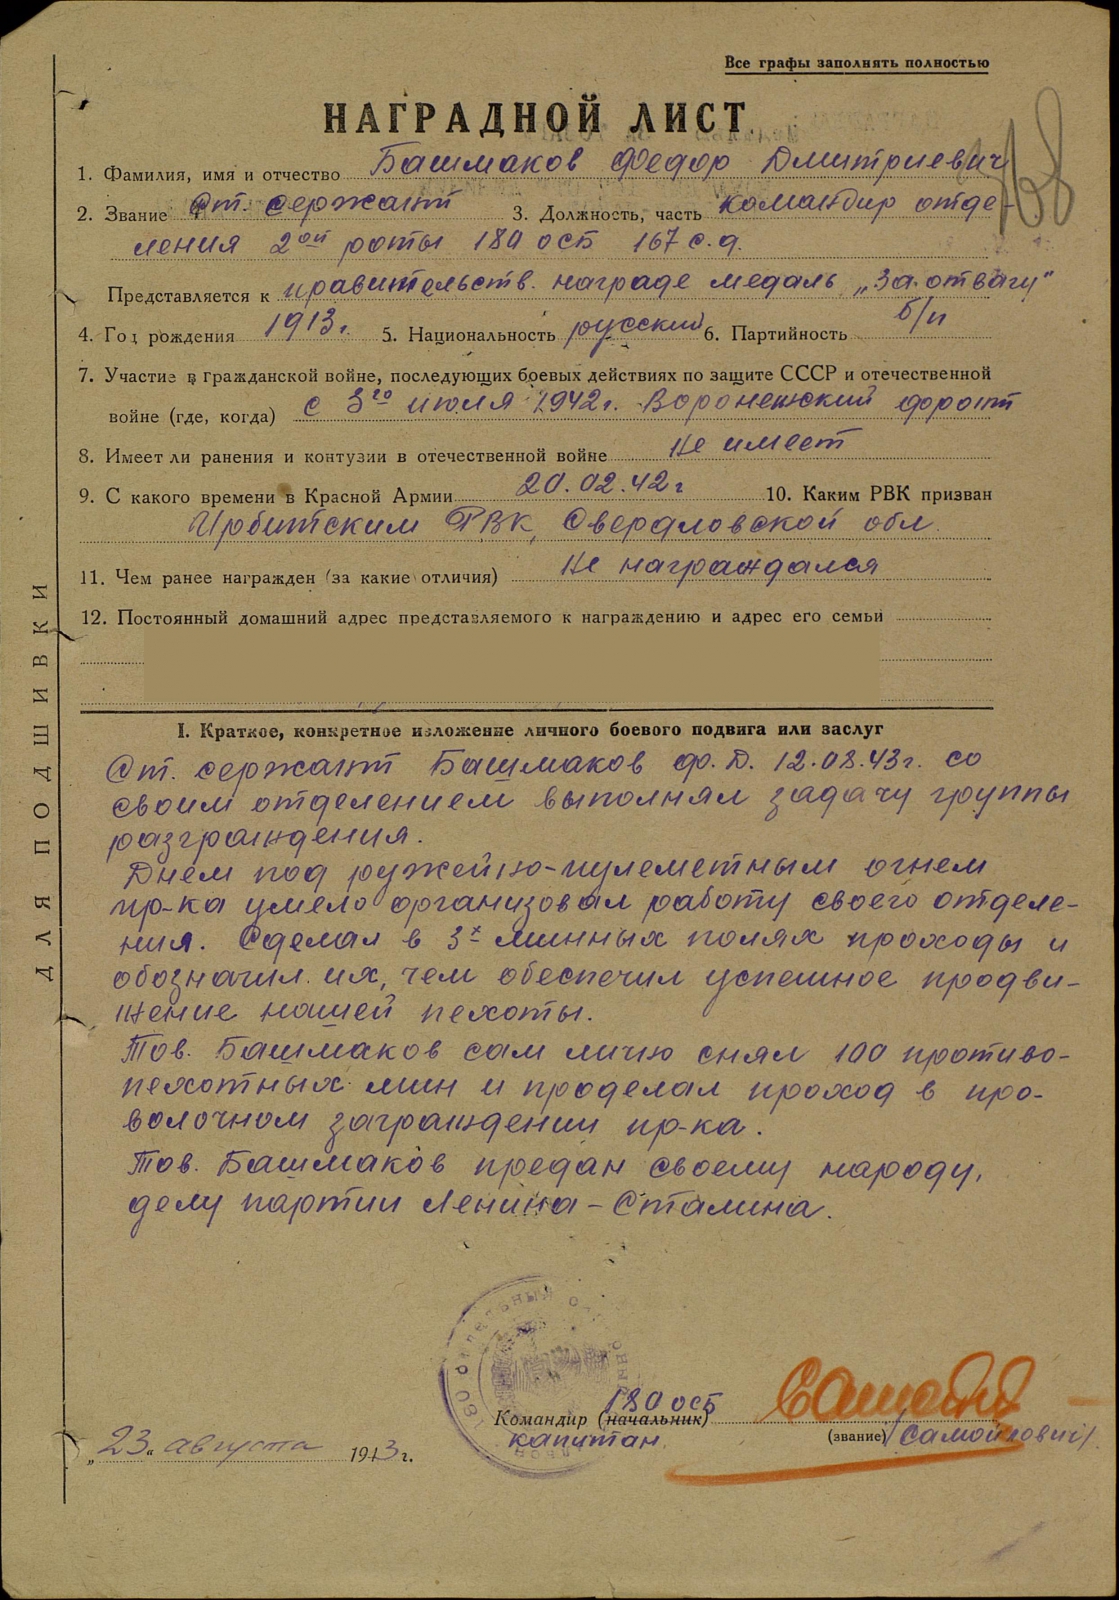 ст.сержант Башмаков Ф.Д.(погиб 7.10.1944) - медаль  За отвагу .jpg